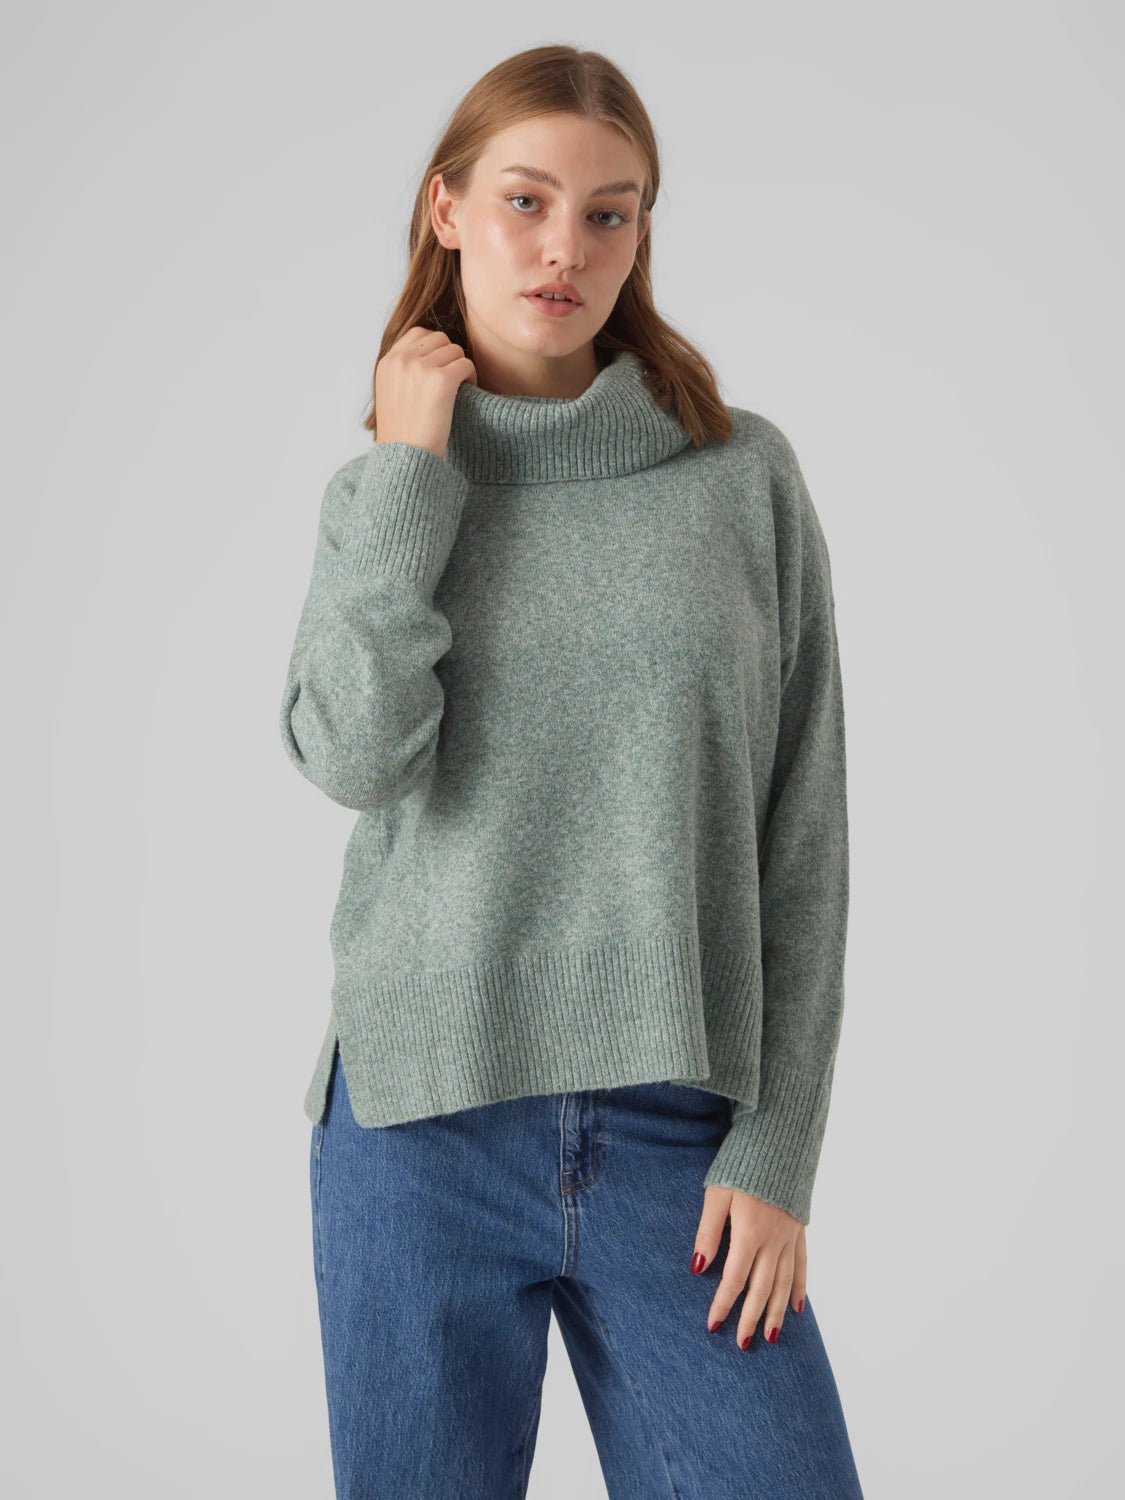 Doffy Cowlneck Sweater